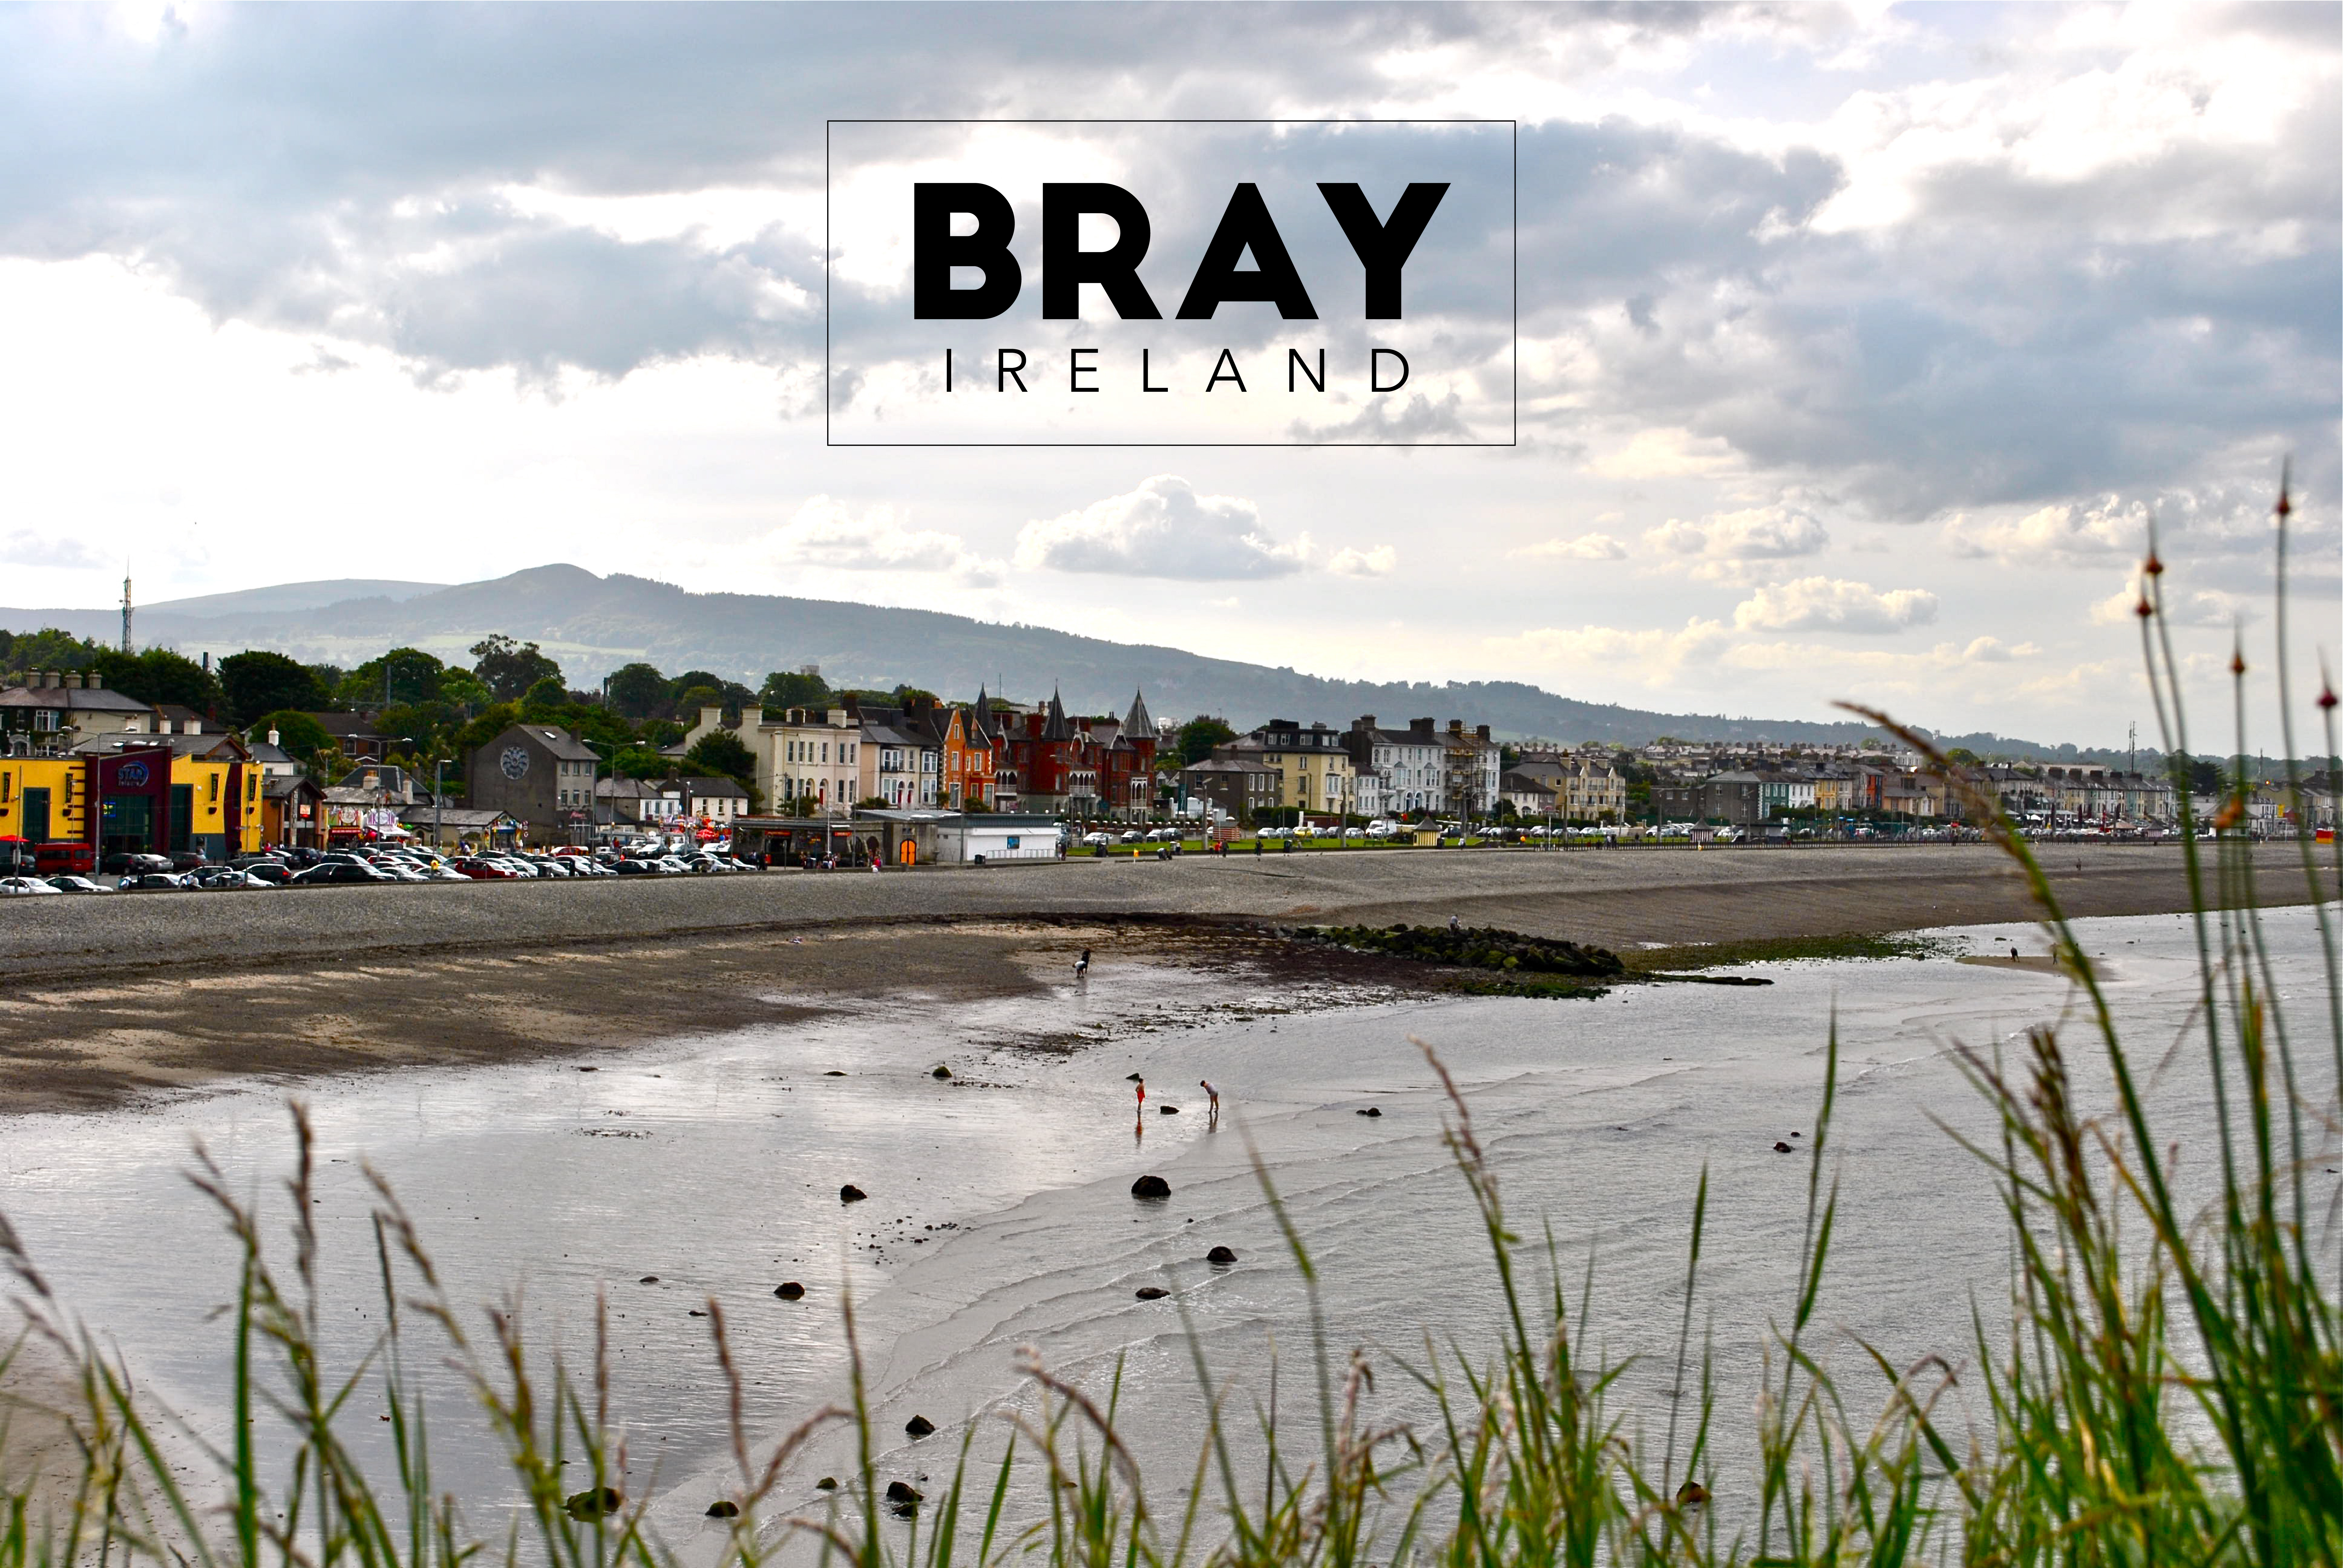 Bray, Ireland